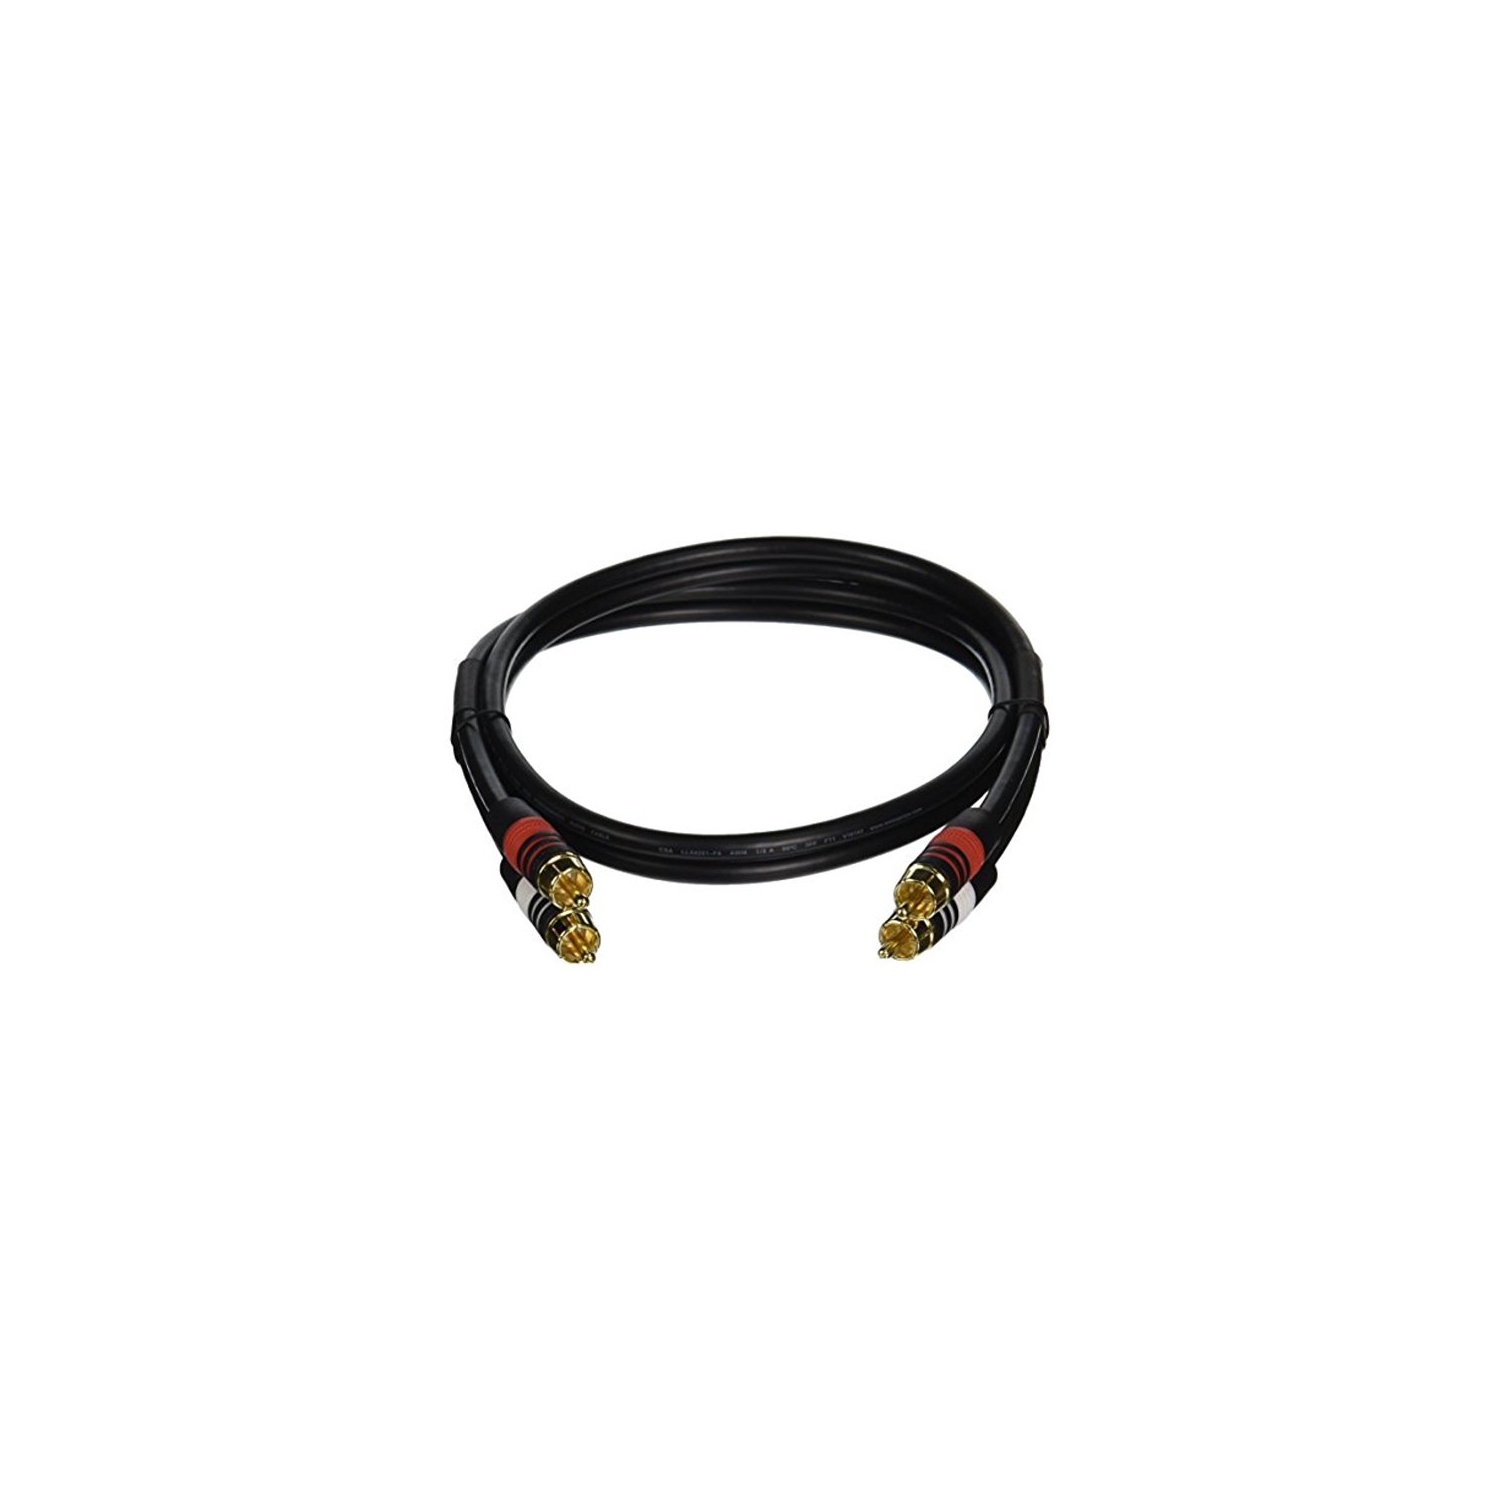 Monoprice 102869 3' Premium 2 RCA Plug to 2 RCA Plug 22AWG Cable - Black